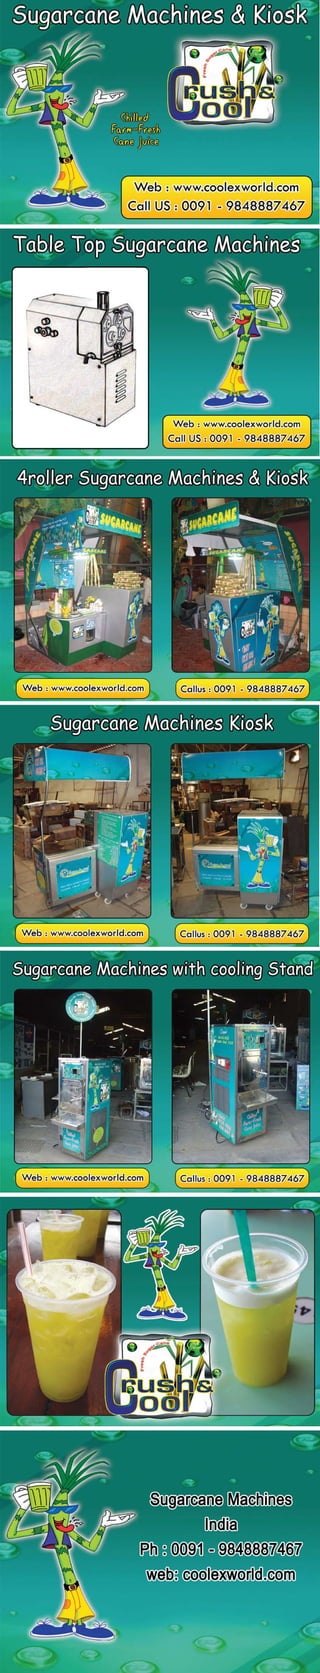 Heavy duty sugarcane machines hyderabad